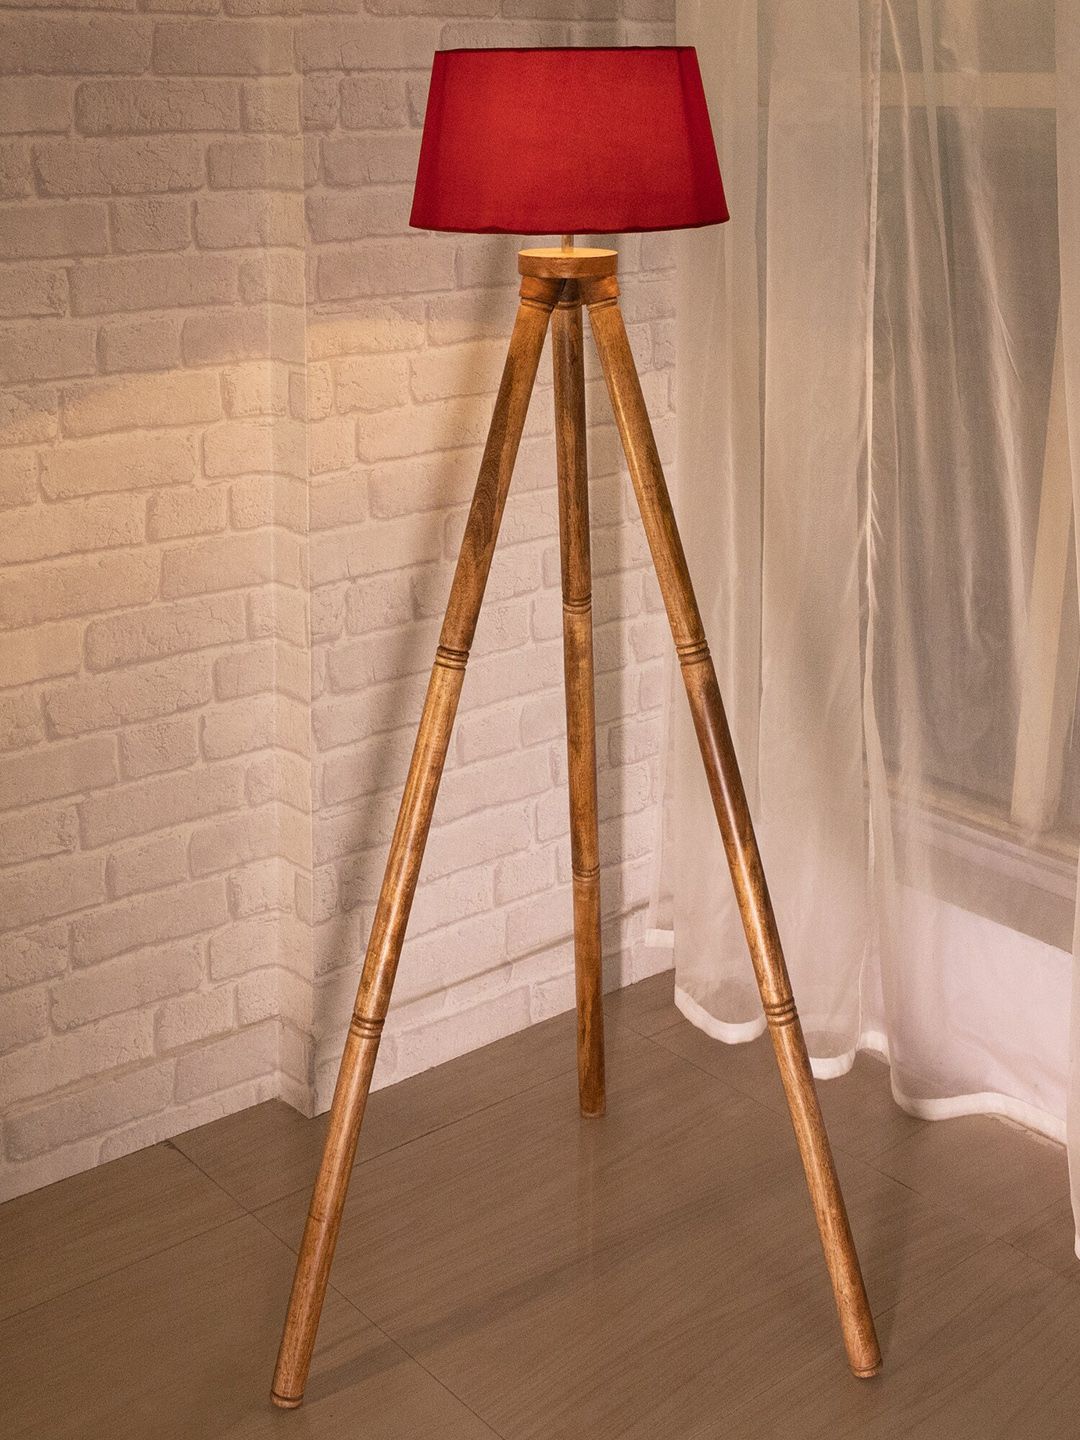 Homesake Red Wood Tripod Floor Lamp Price in India